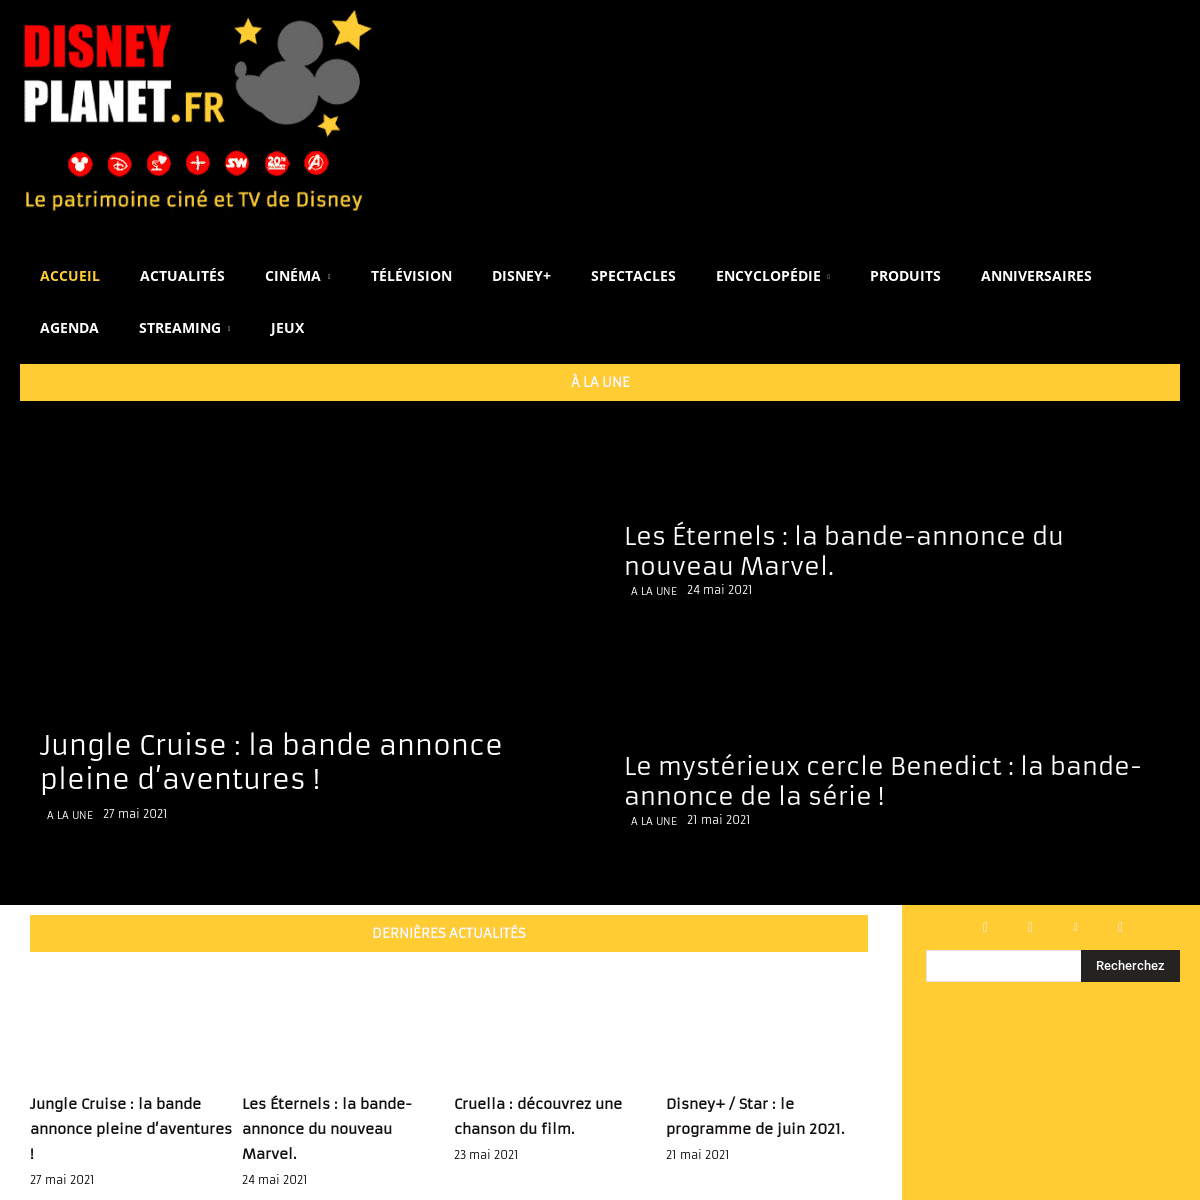 A complete backup of https://disney-planet.fr